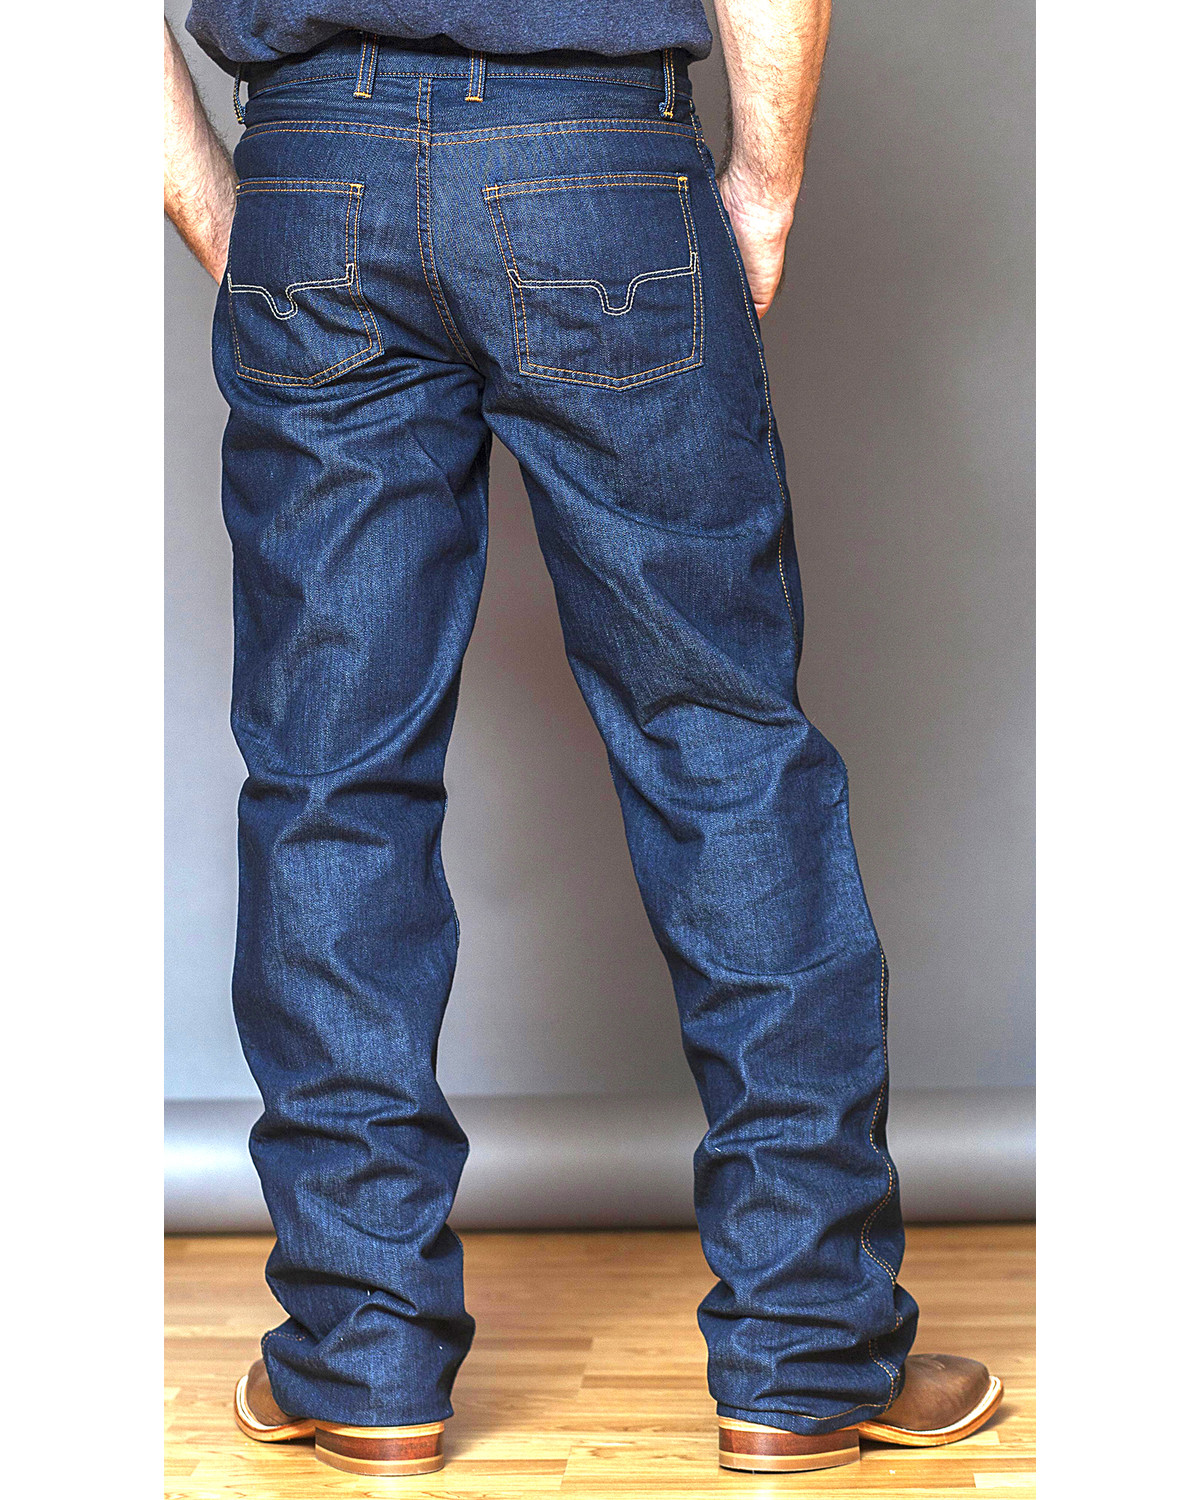 kimes ranch jeans on sale